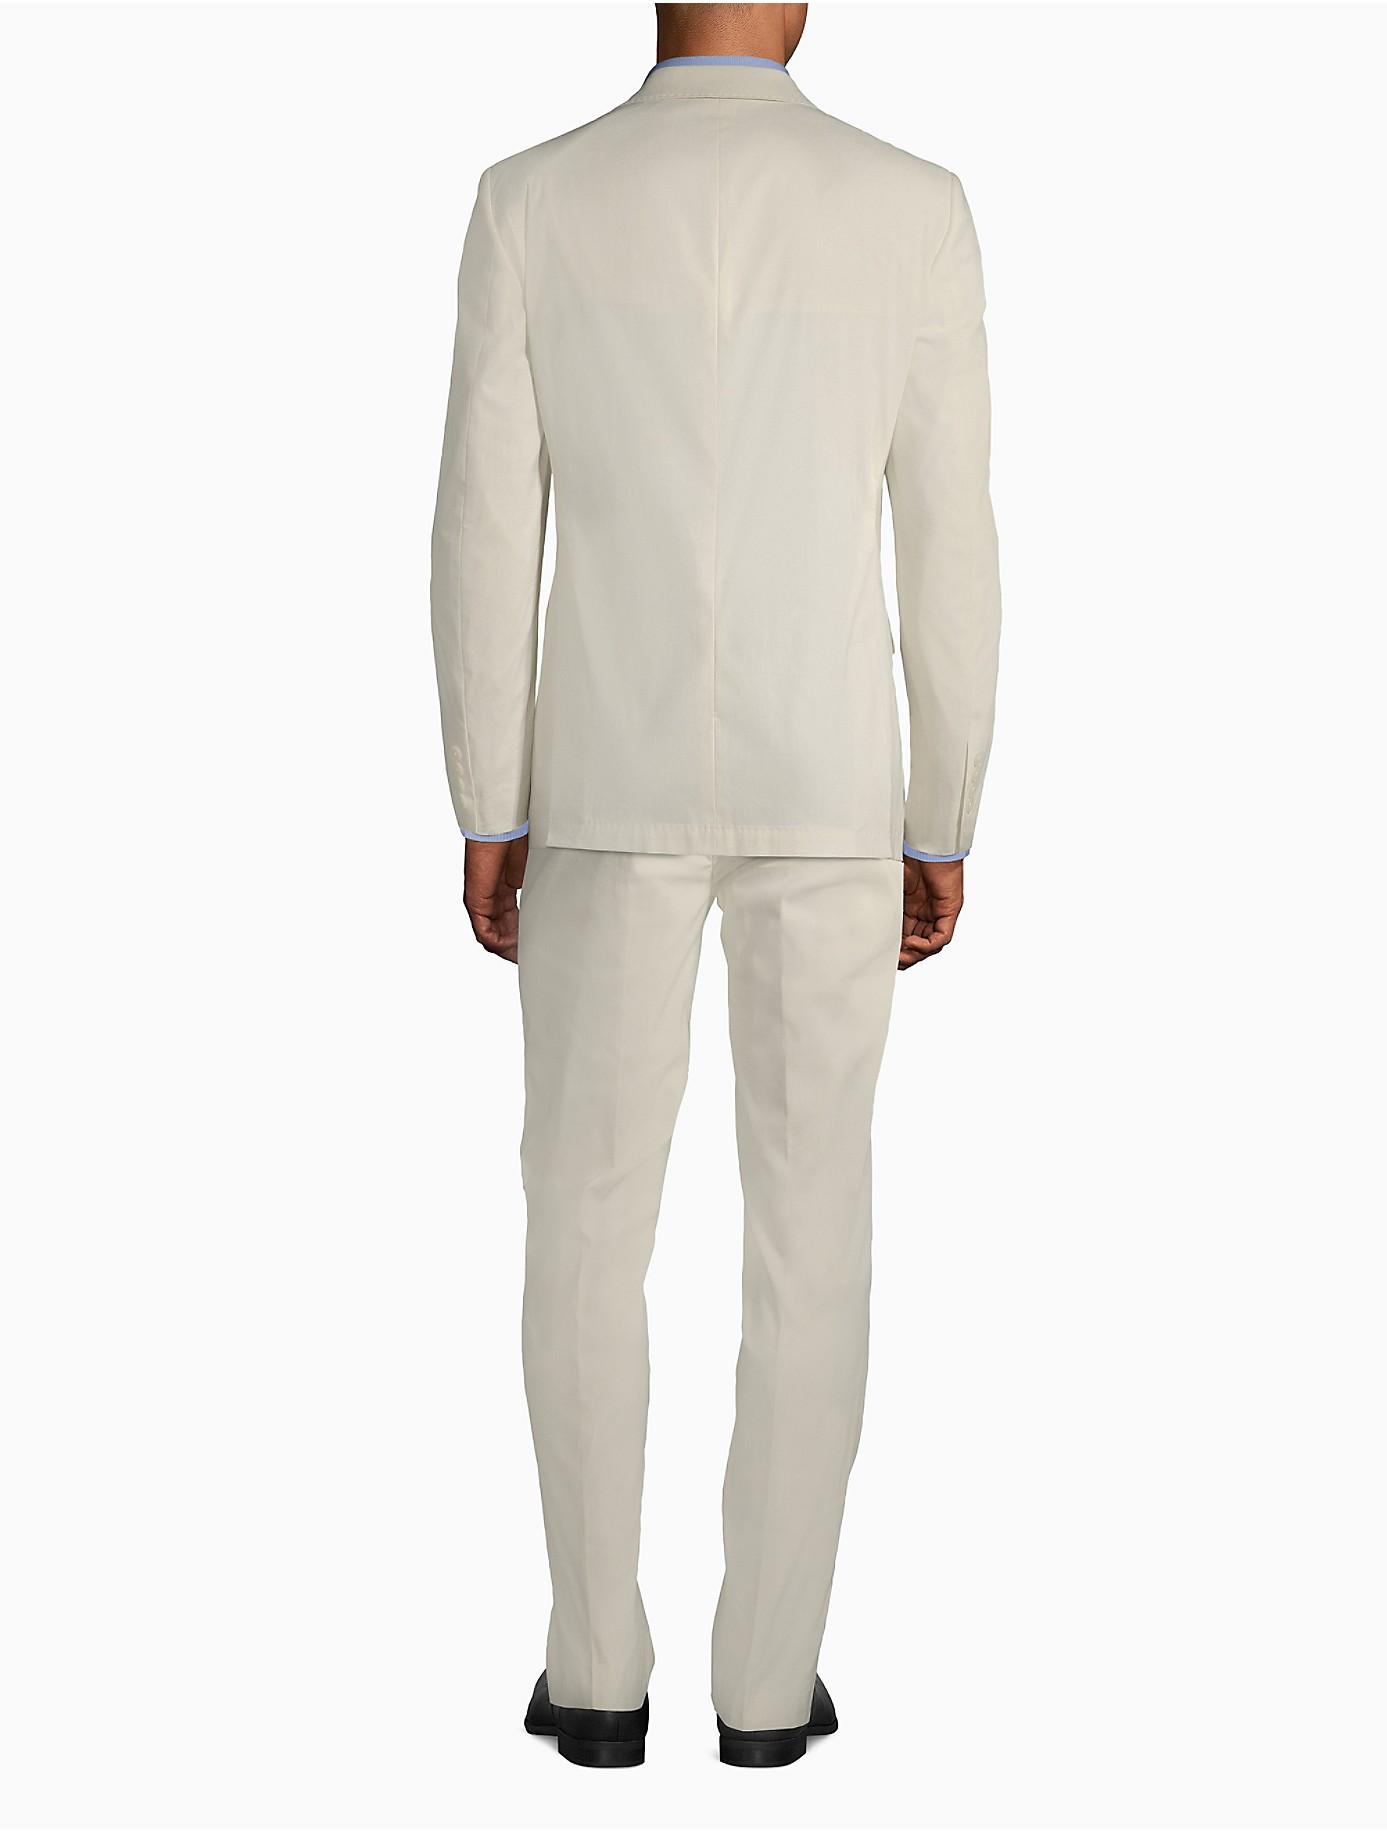 Calvin Klein Slim Fit Linen Blend Suit Jacket for Men - Lyst